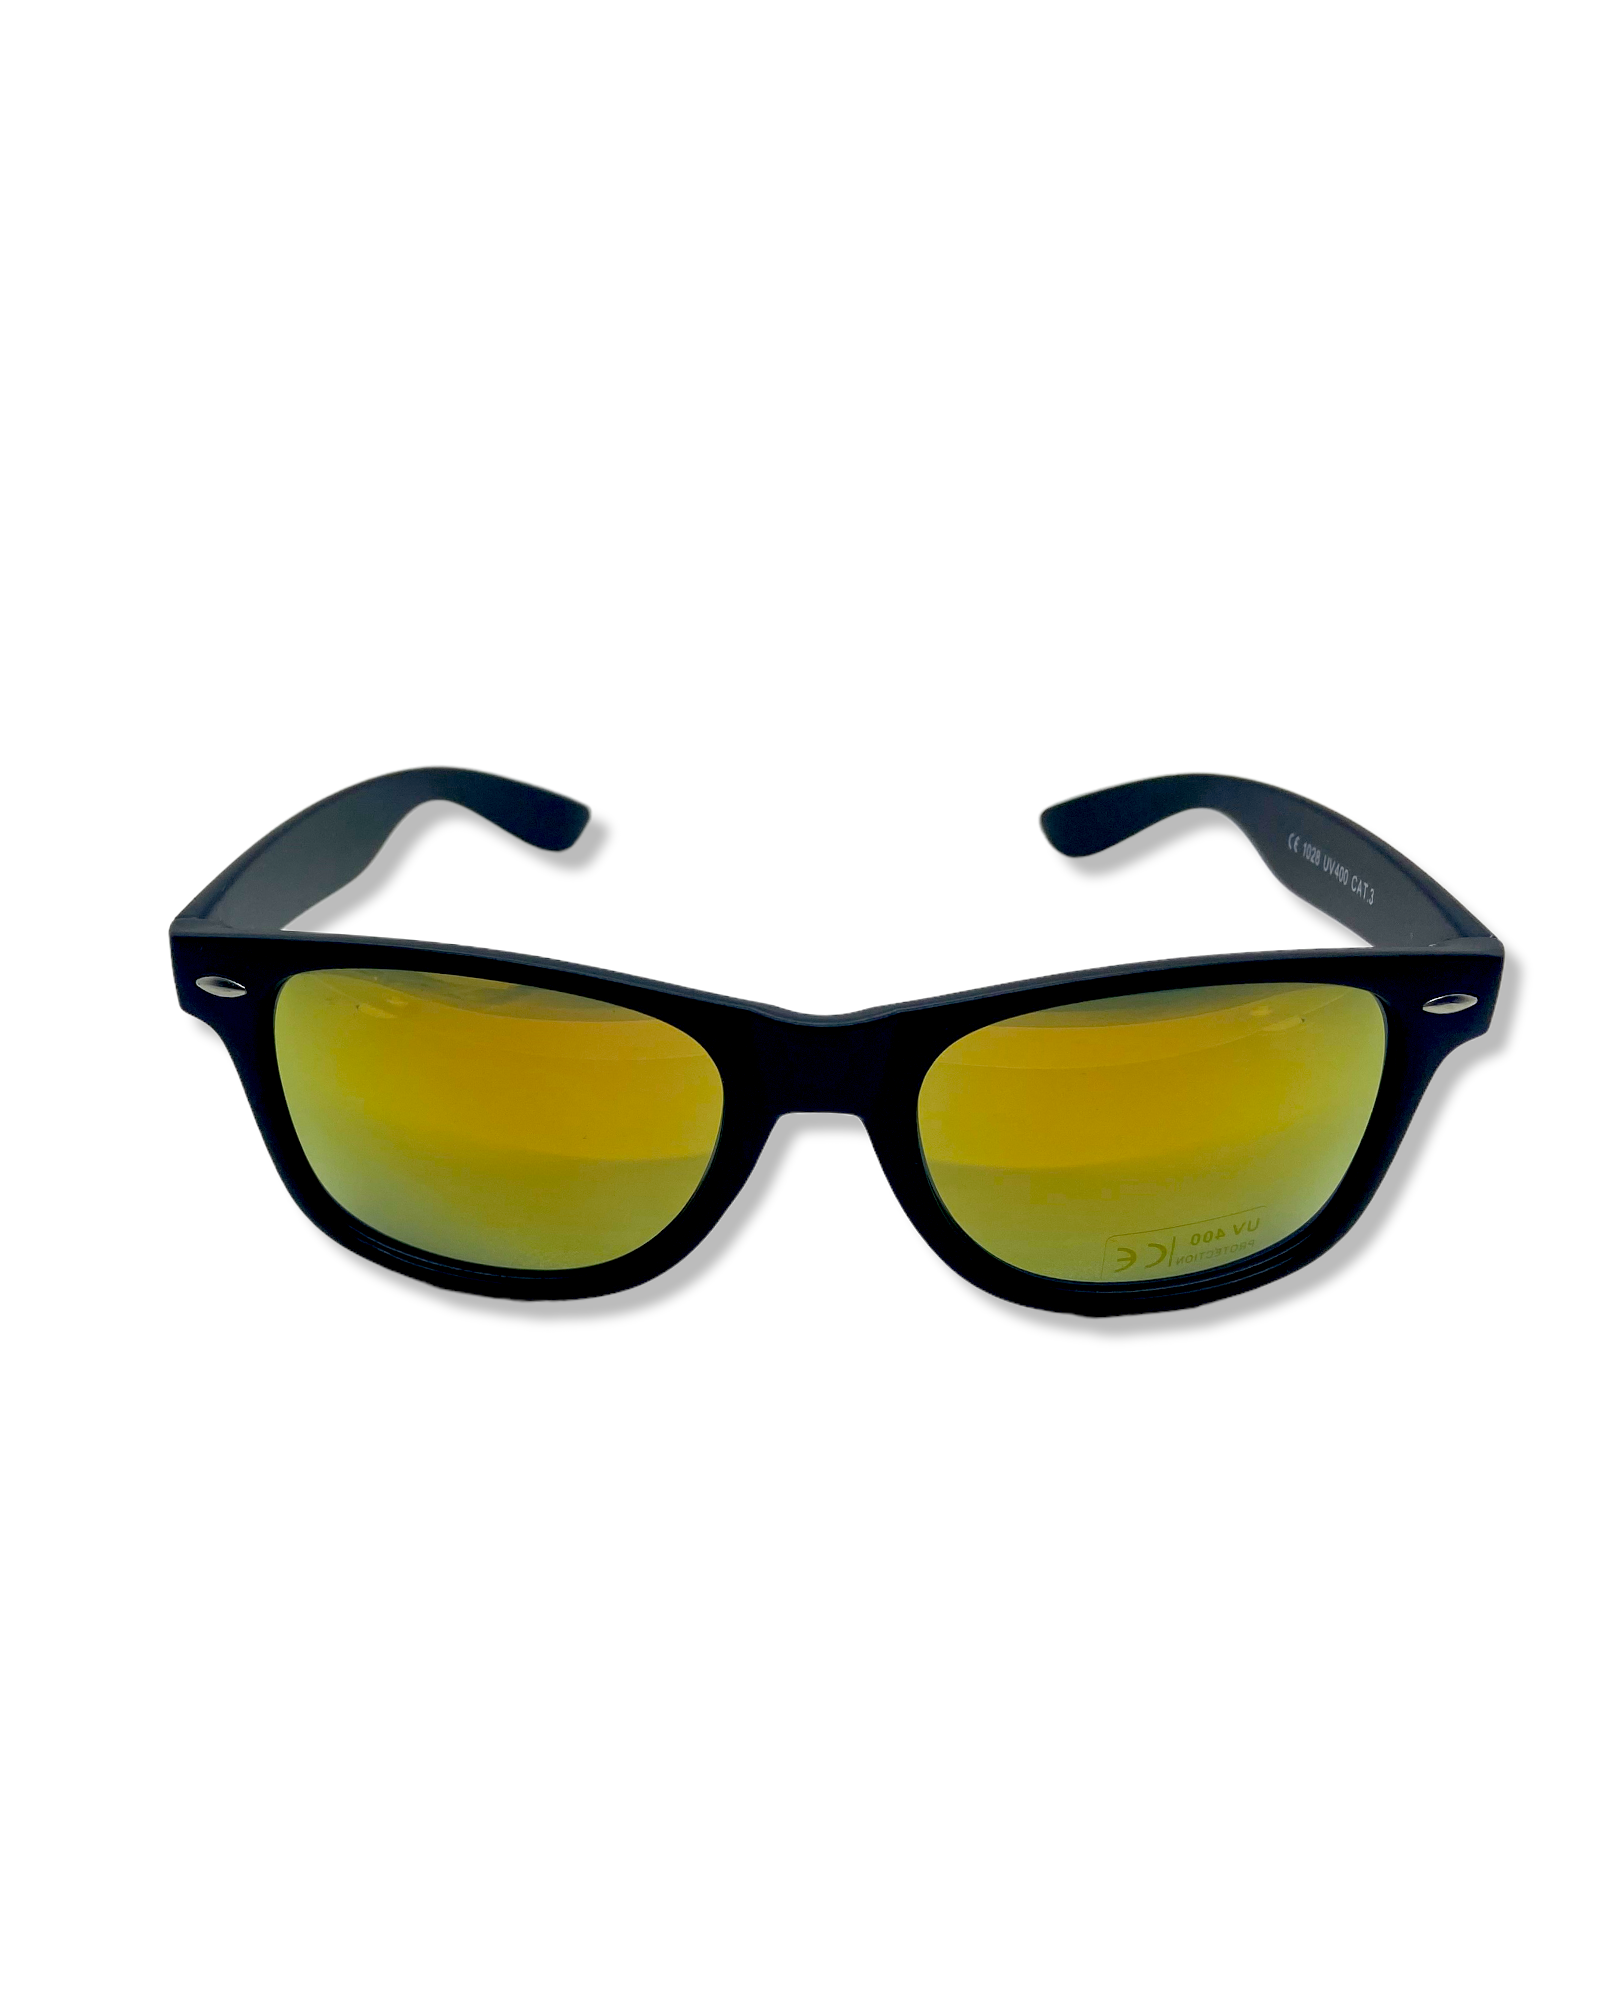 EVOL Sunglasses - Yellow